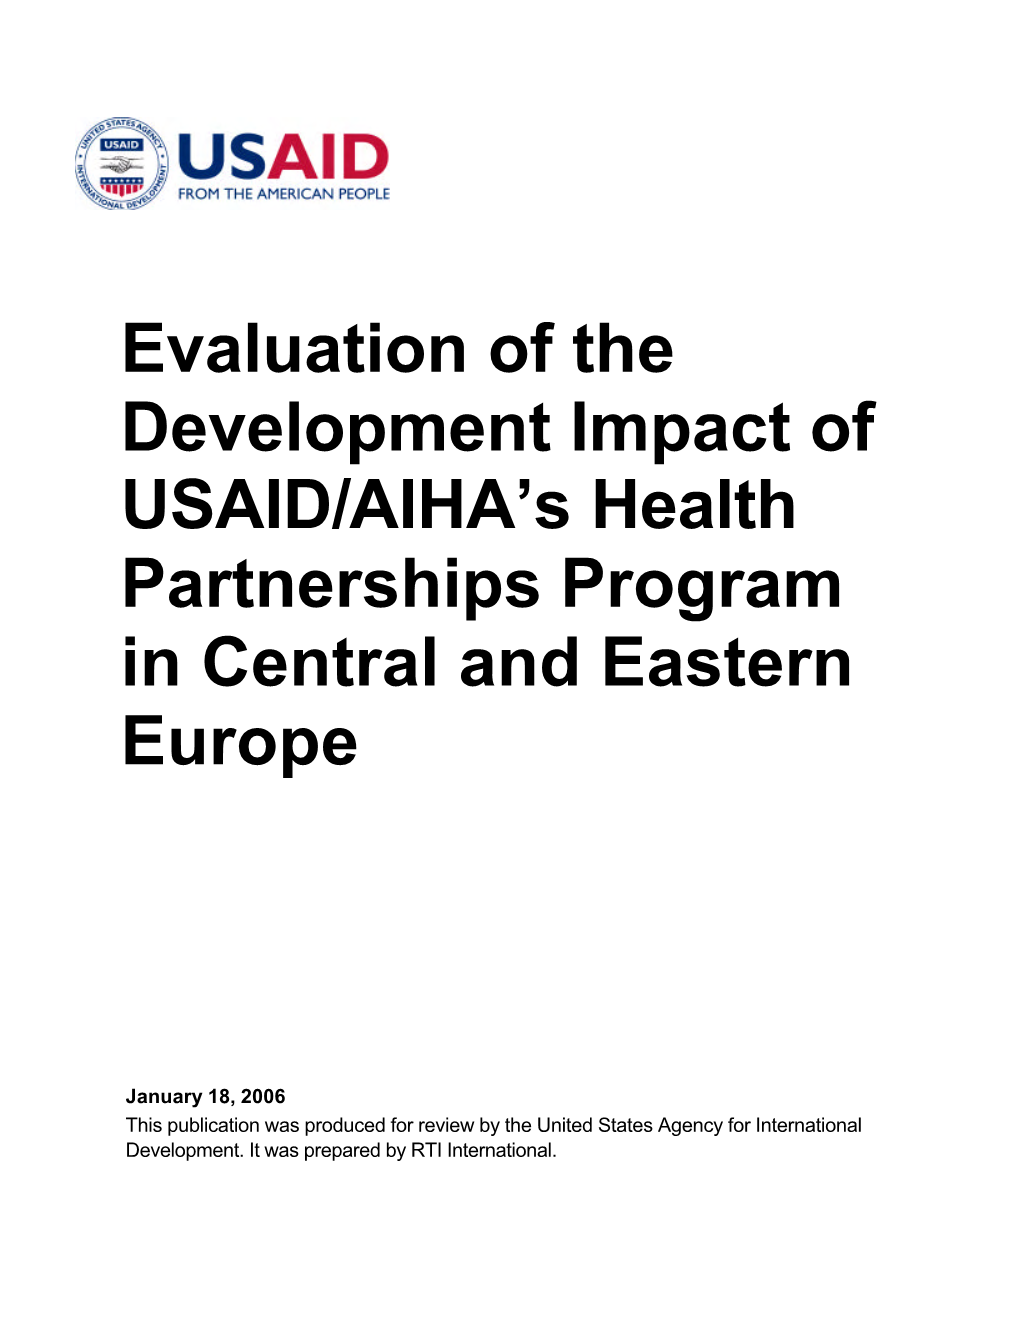 Evaluation of the Development Impact of USAID/AIHA's Health